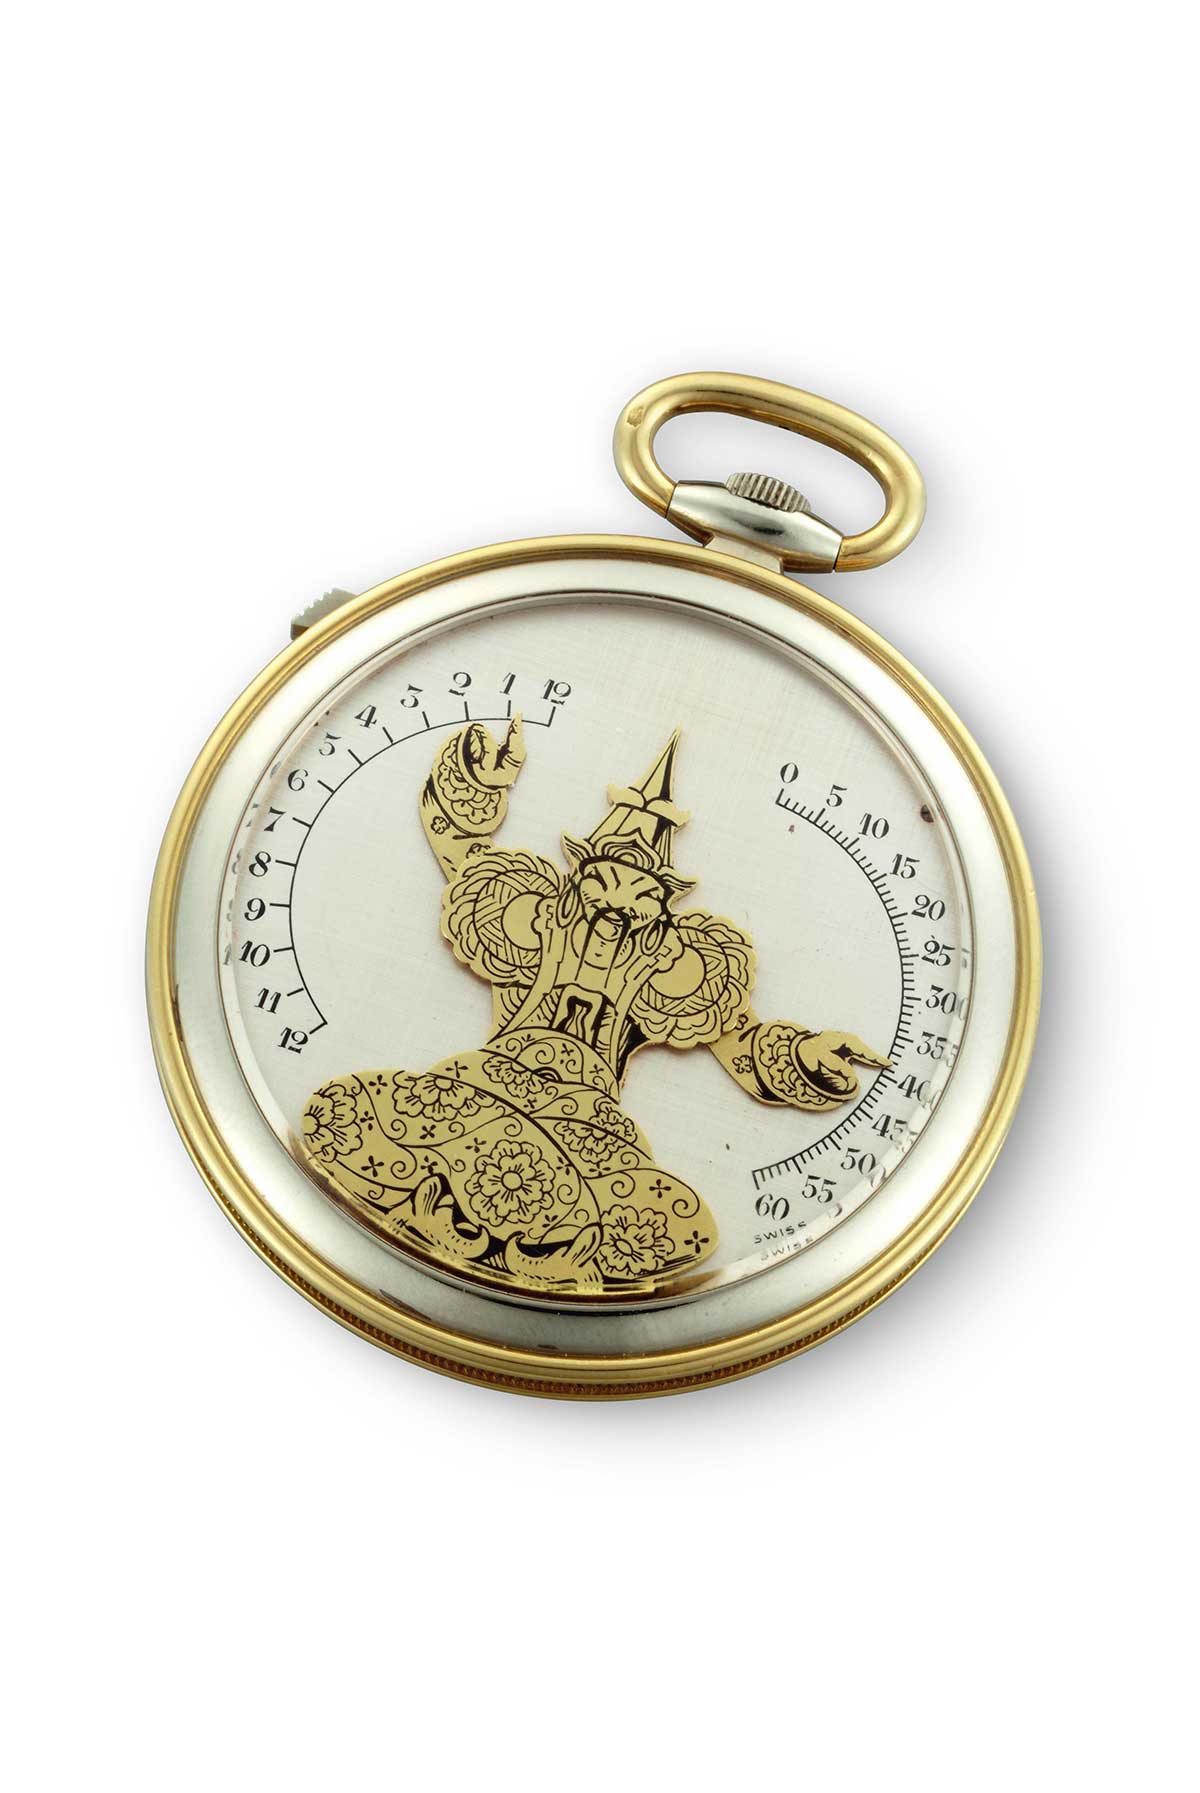 Reloj de bolsillo Vacheron Constantin "Brazos al Aire" de alrededor de 1930